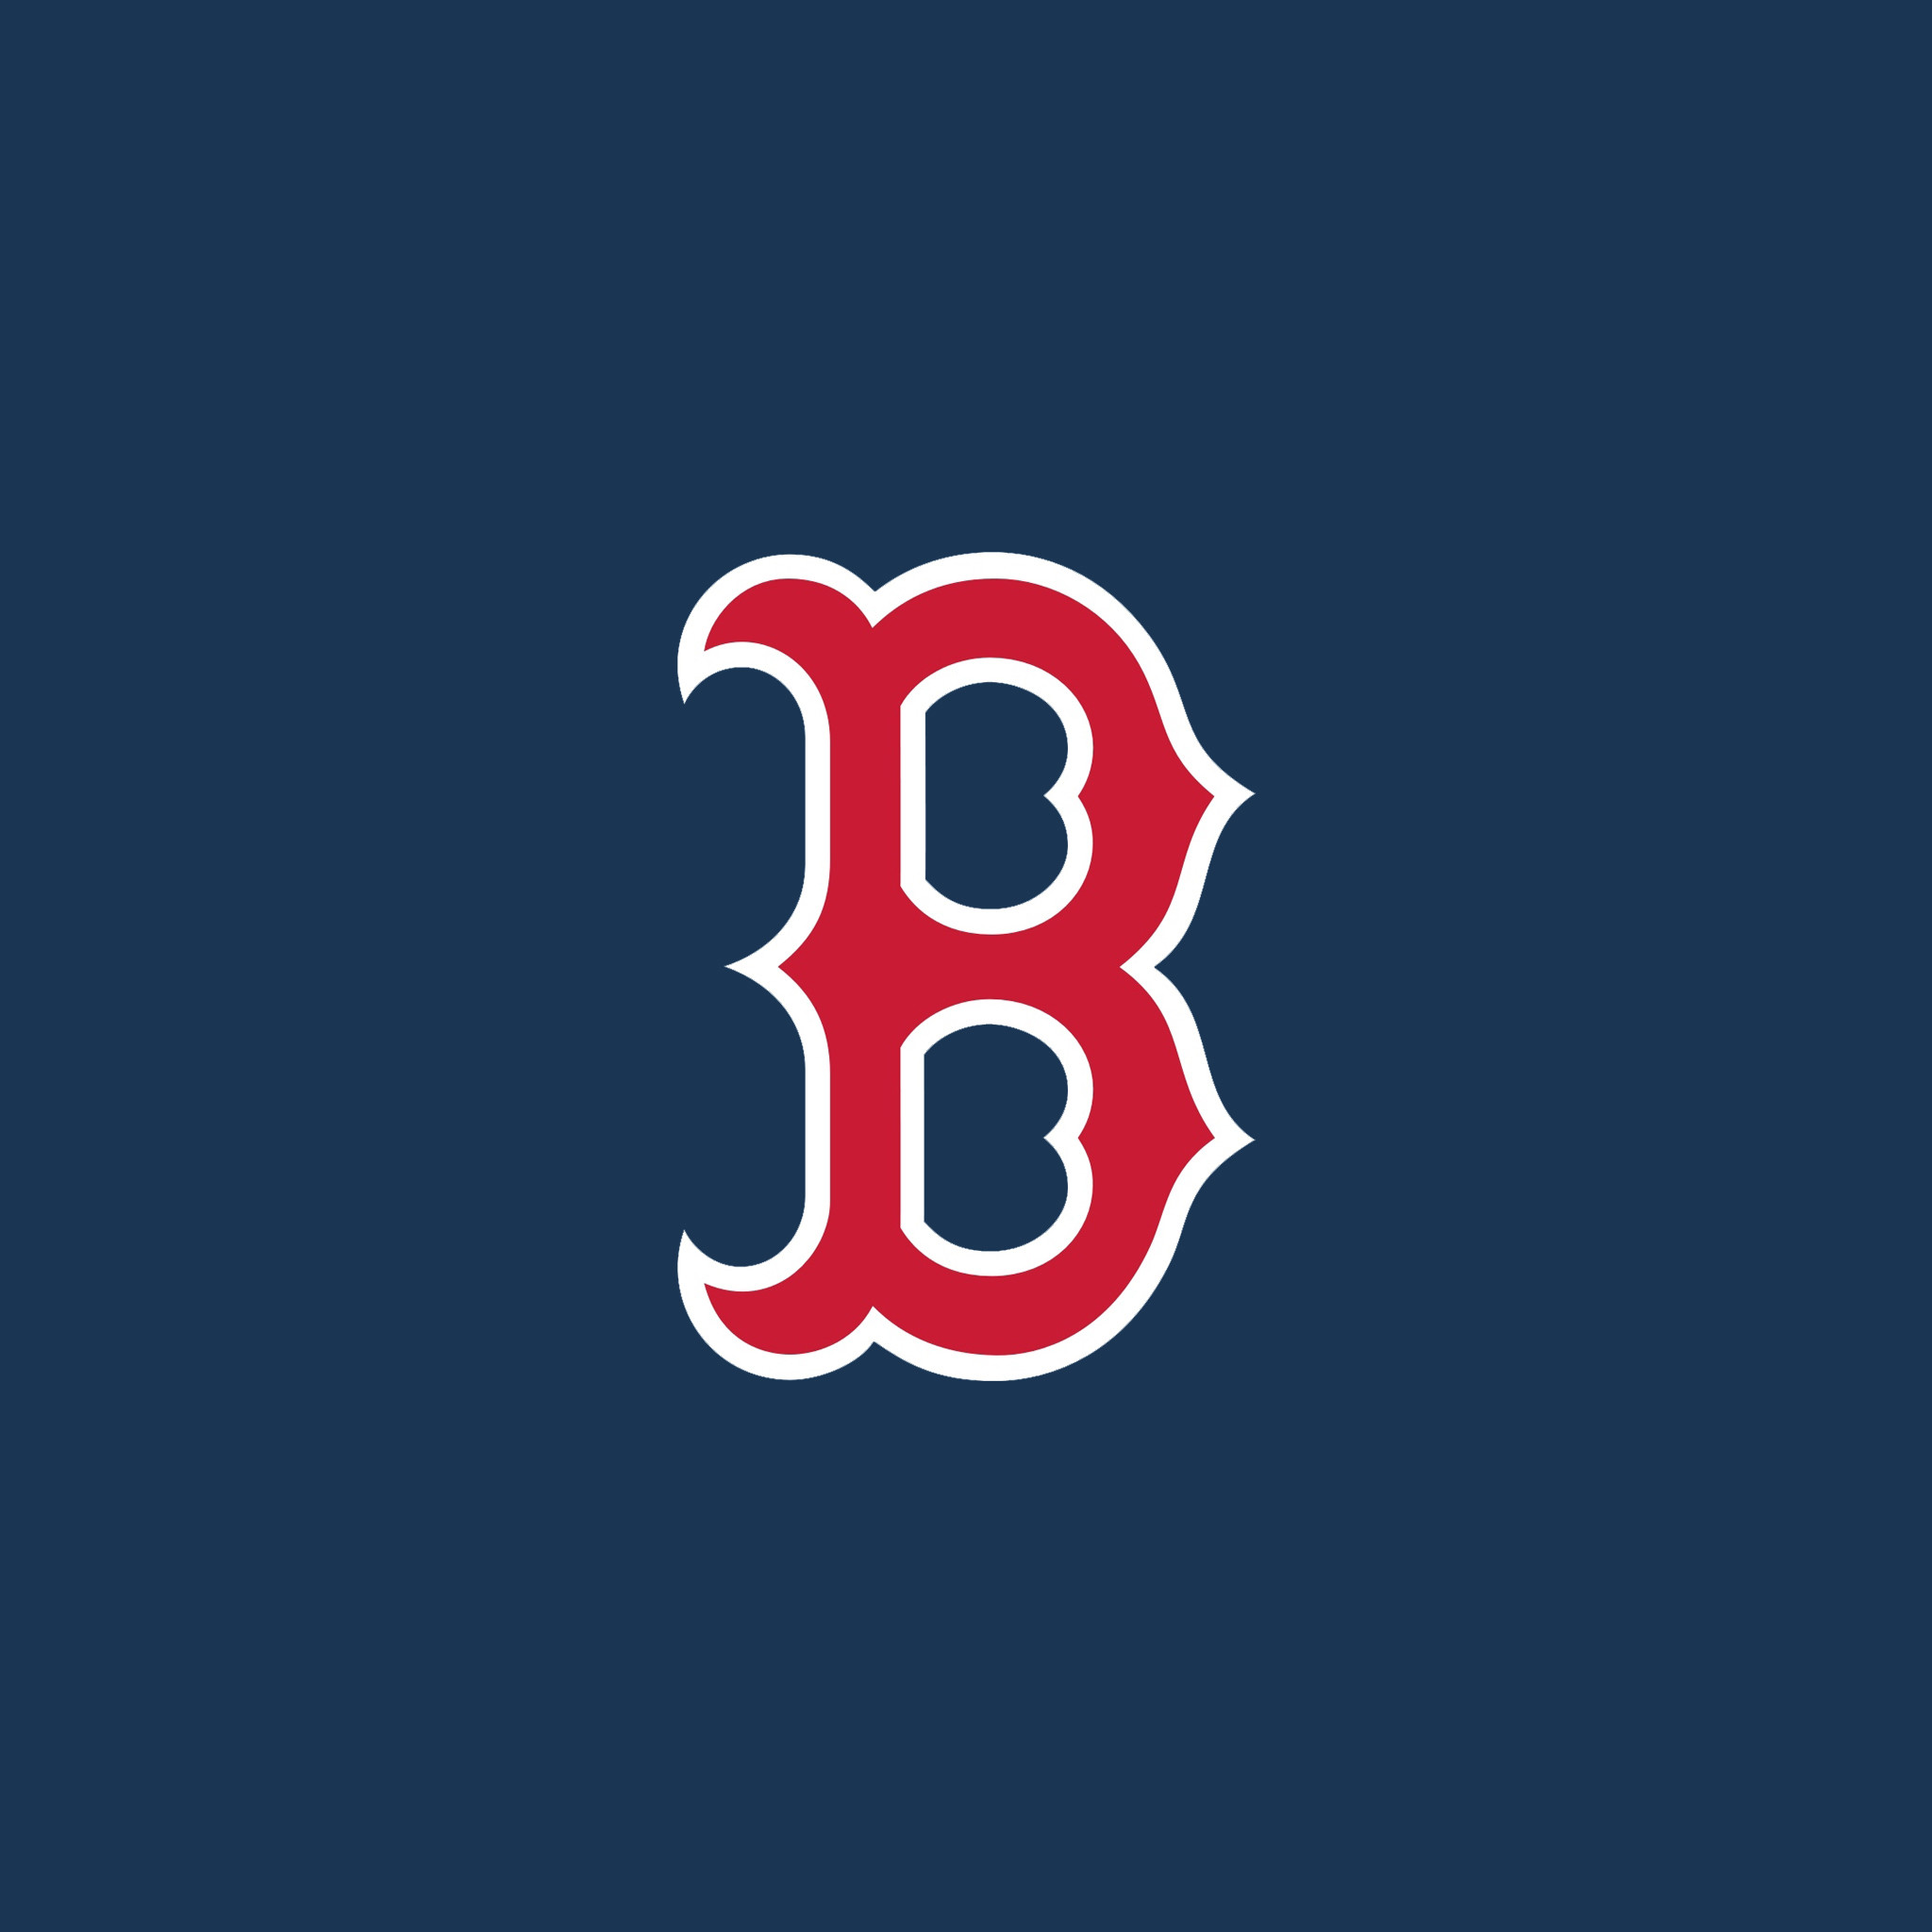 2048x2048 Free Boston Red Sox desktop wallpaper | Boston Red Sox wallpapers